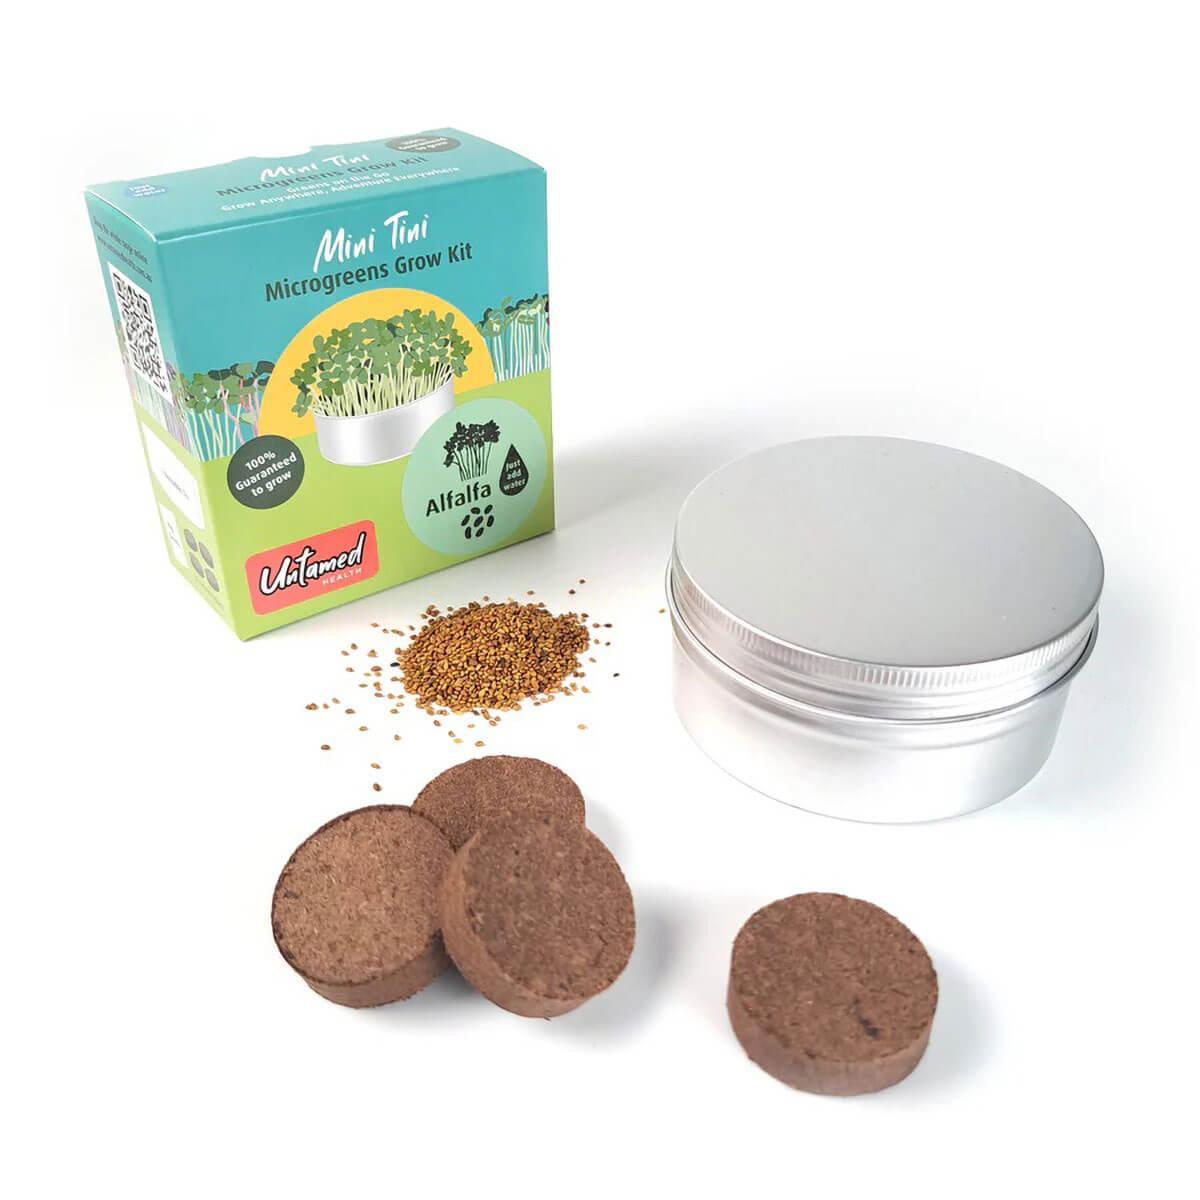 Mini Tini Microgreens Kit - Alfalfa - Untamed Health